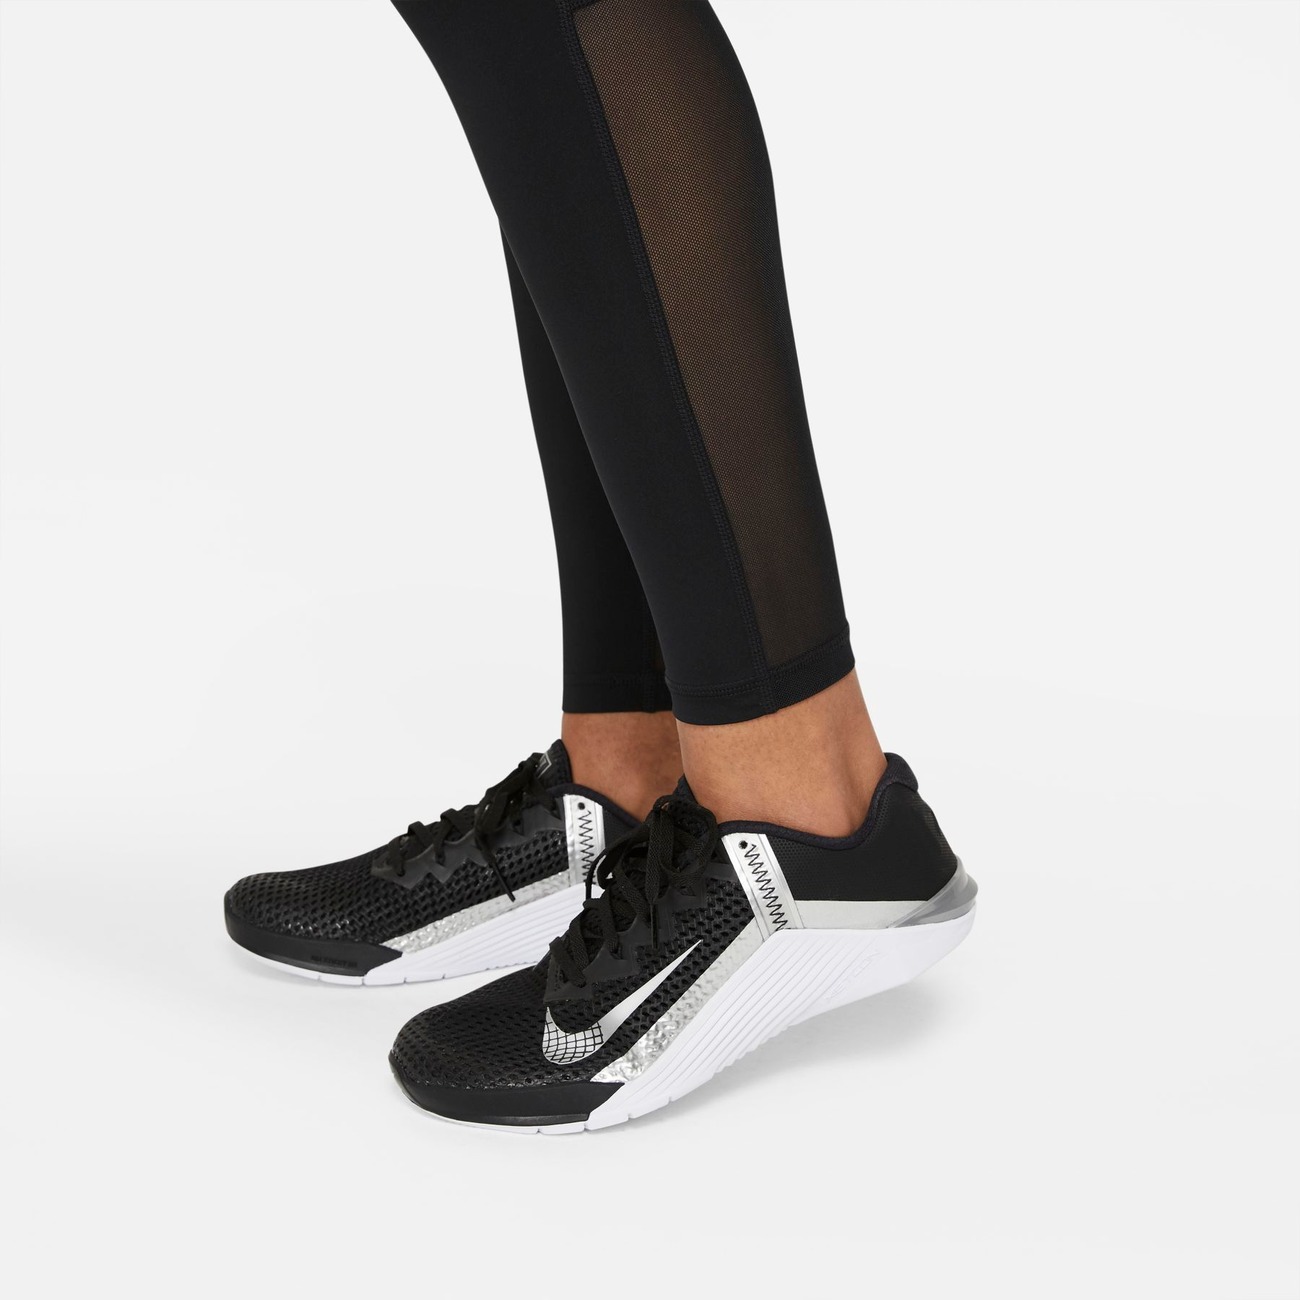 Legging Nike Pro Feminina - Foto 5